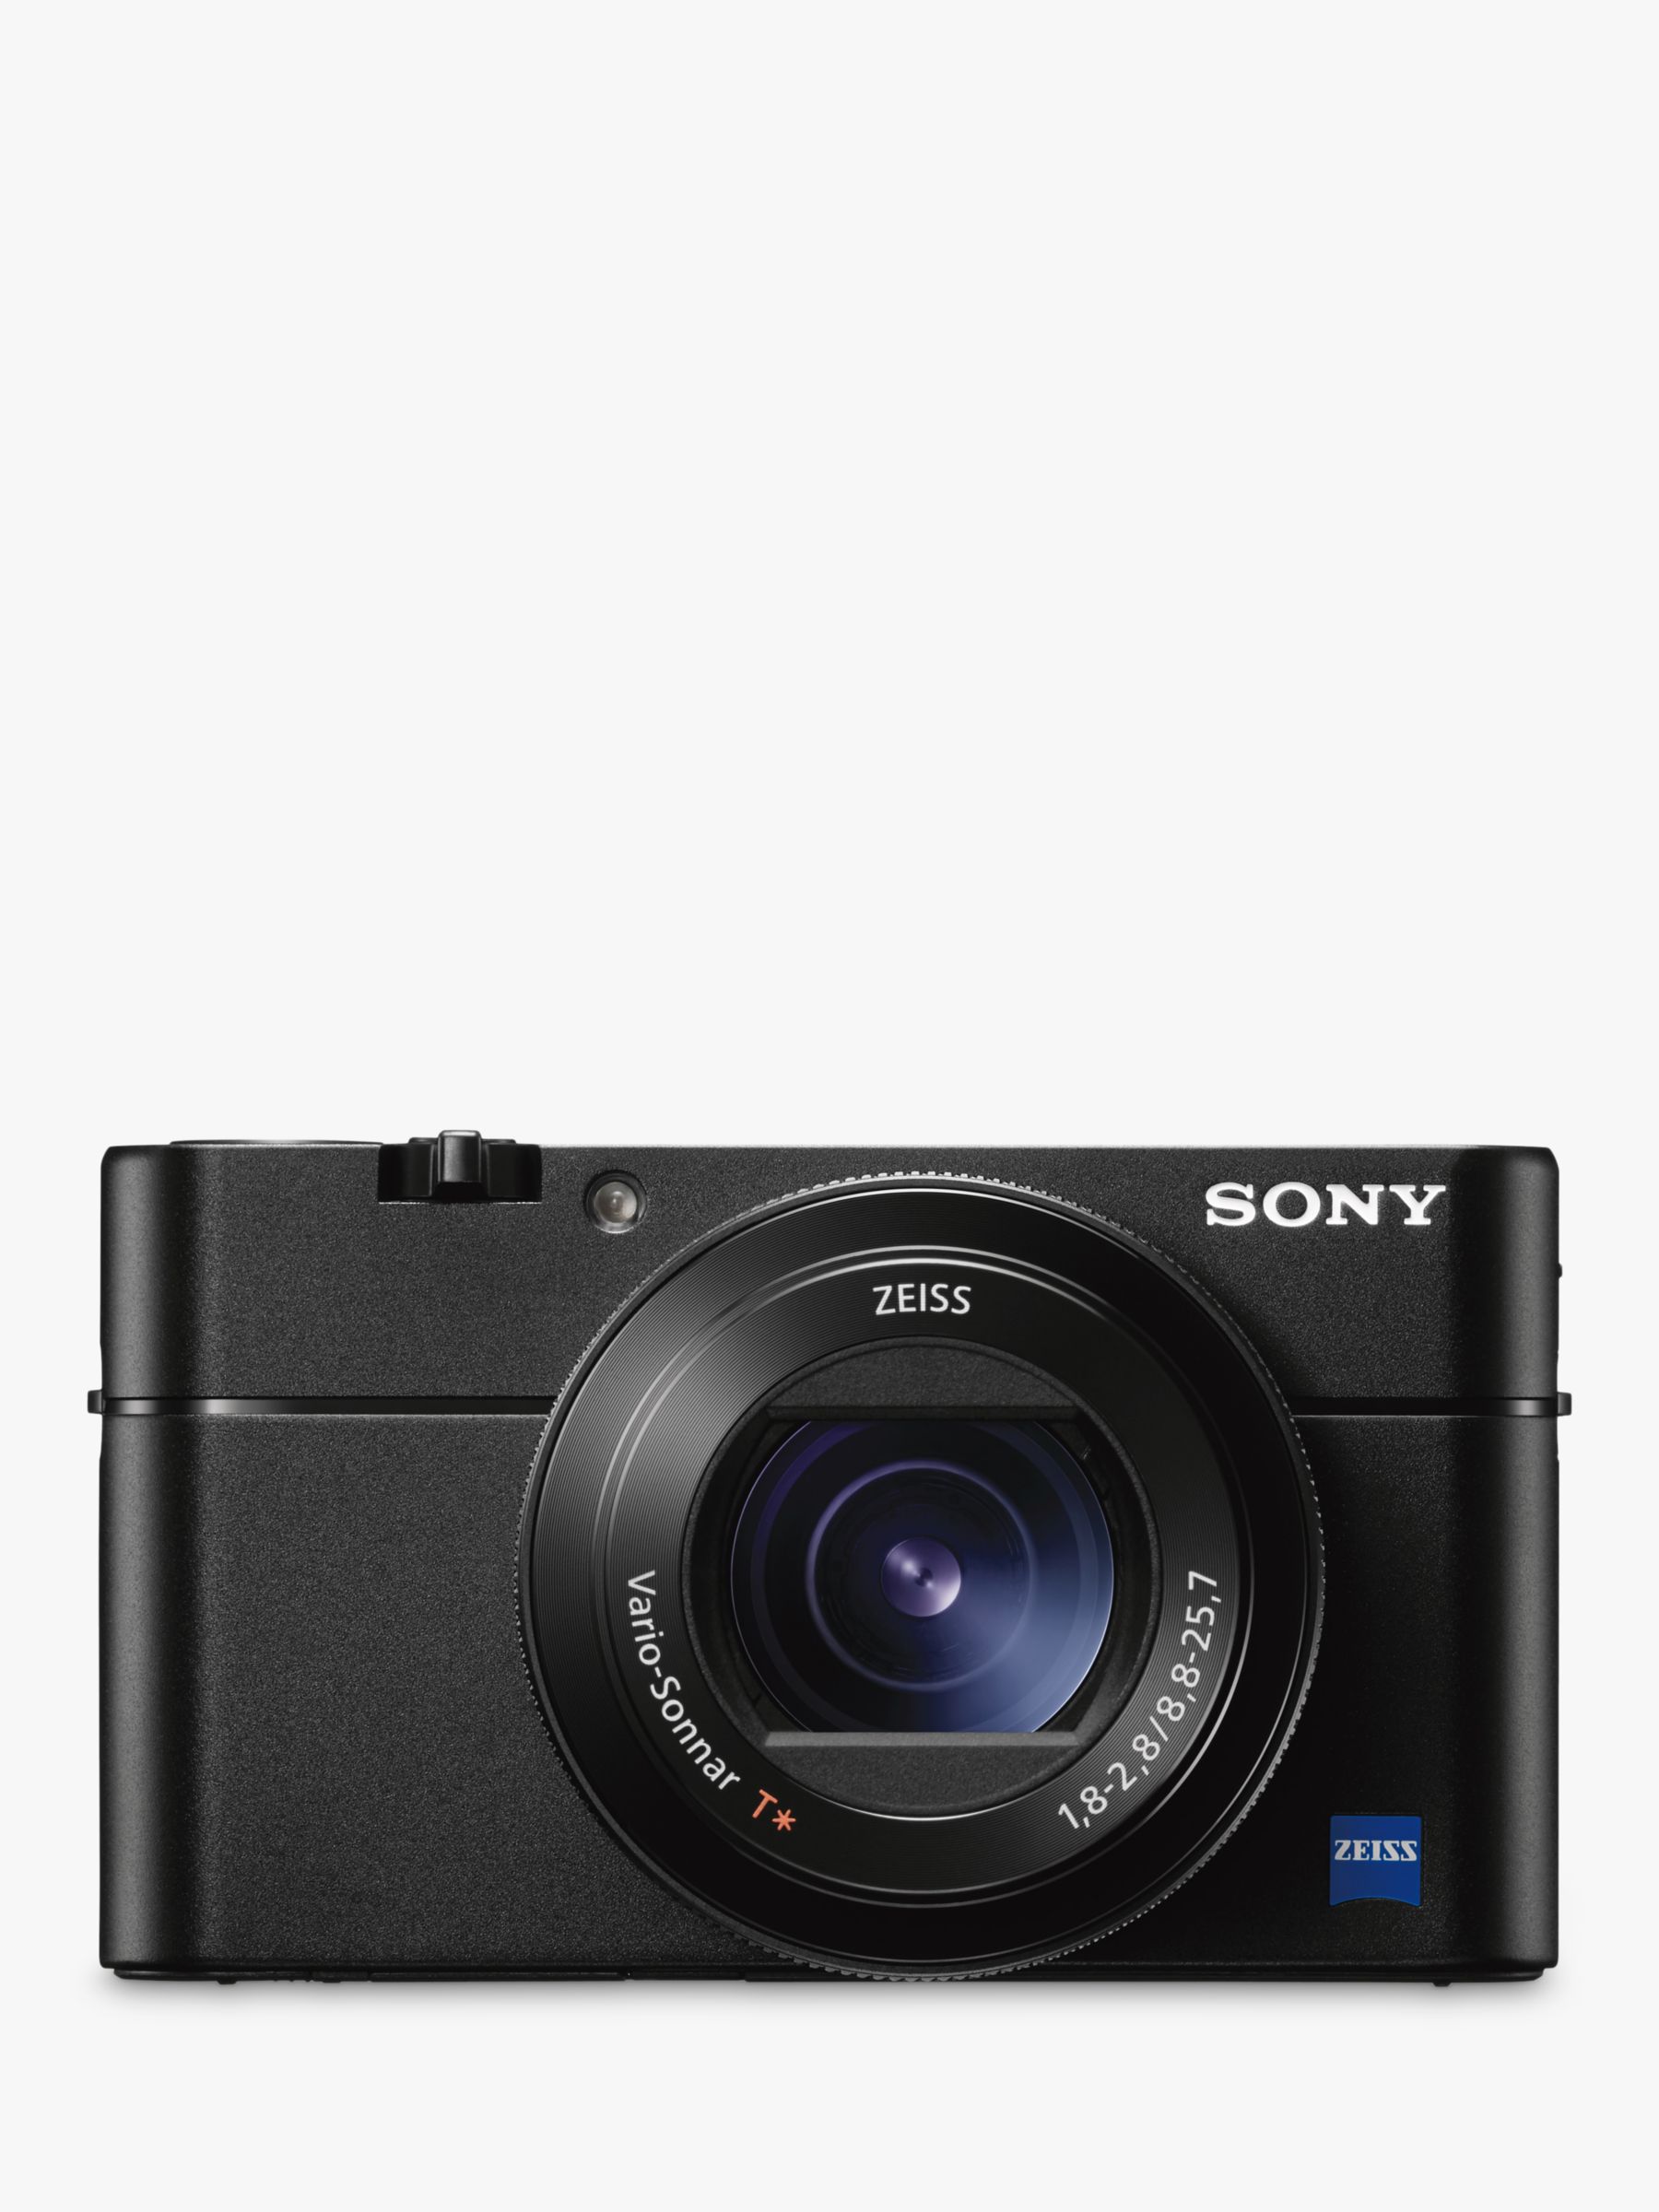 Sony Cyber-shot DSC-RX100 Va Camera, 4K, 20.1MP, 2.9x Optical Zoom, Wi-Fi, NFC, OLED EVF, 3 Tiltable Screen